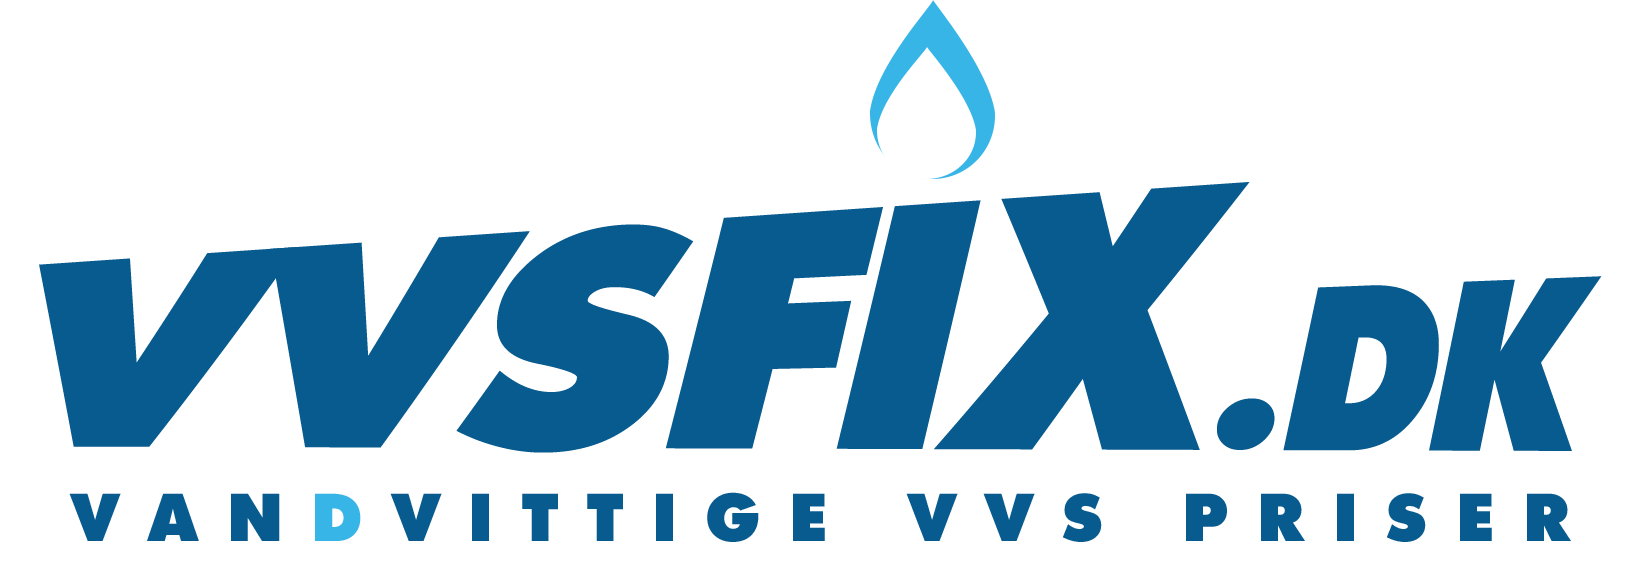 VVSfix.dk